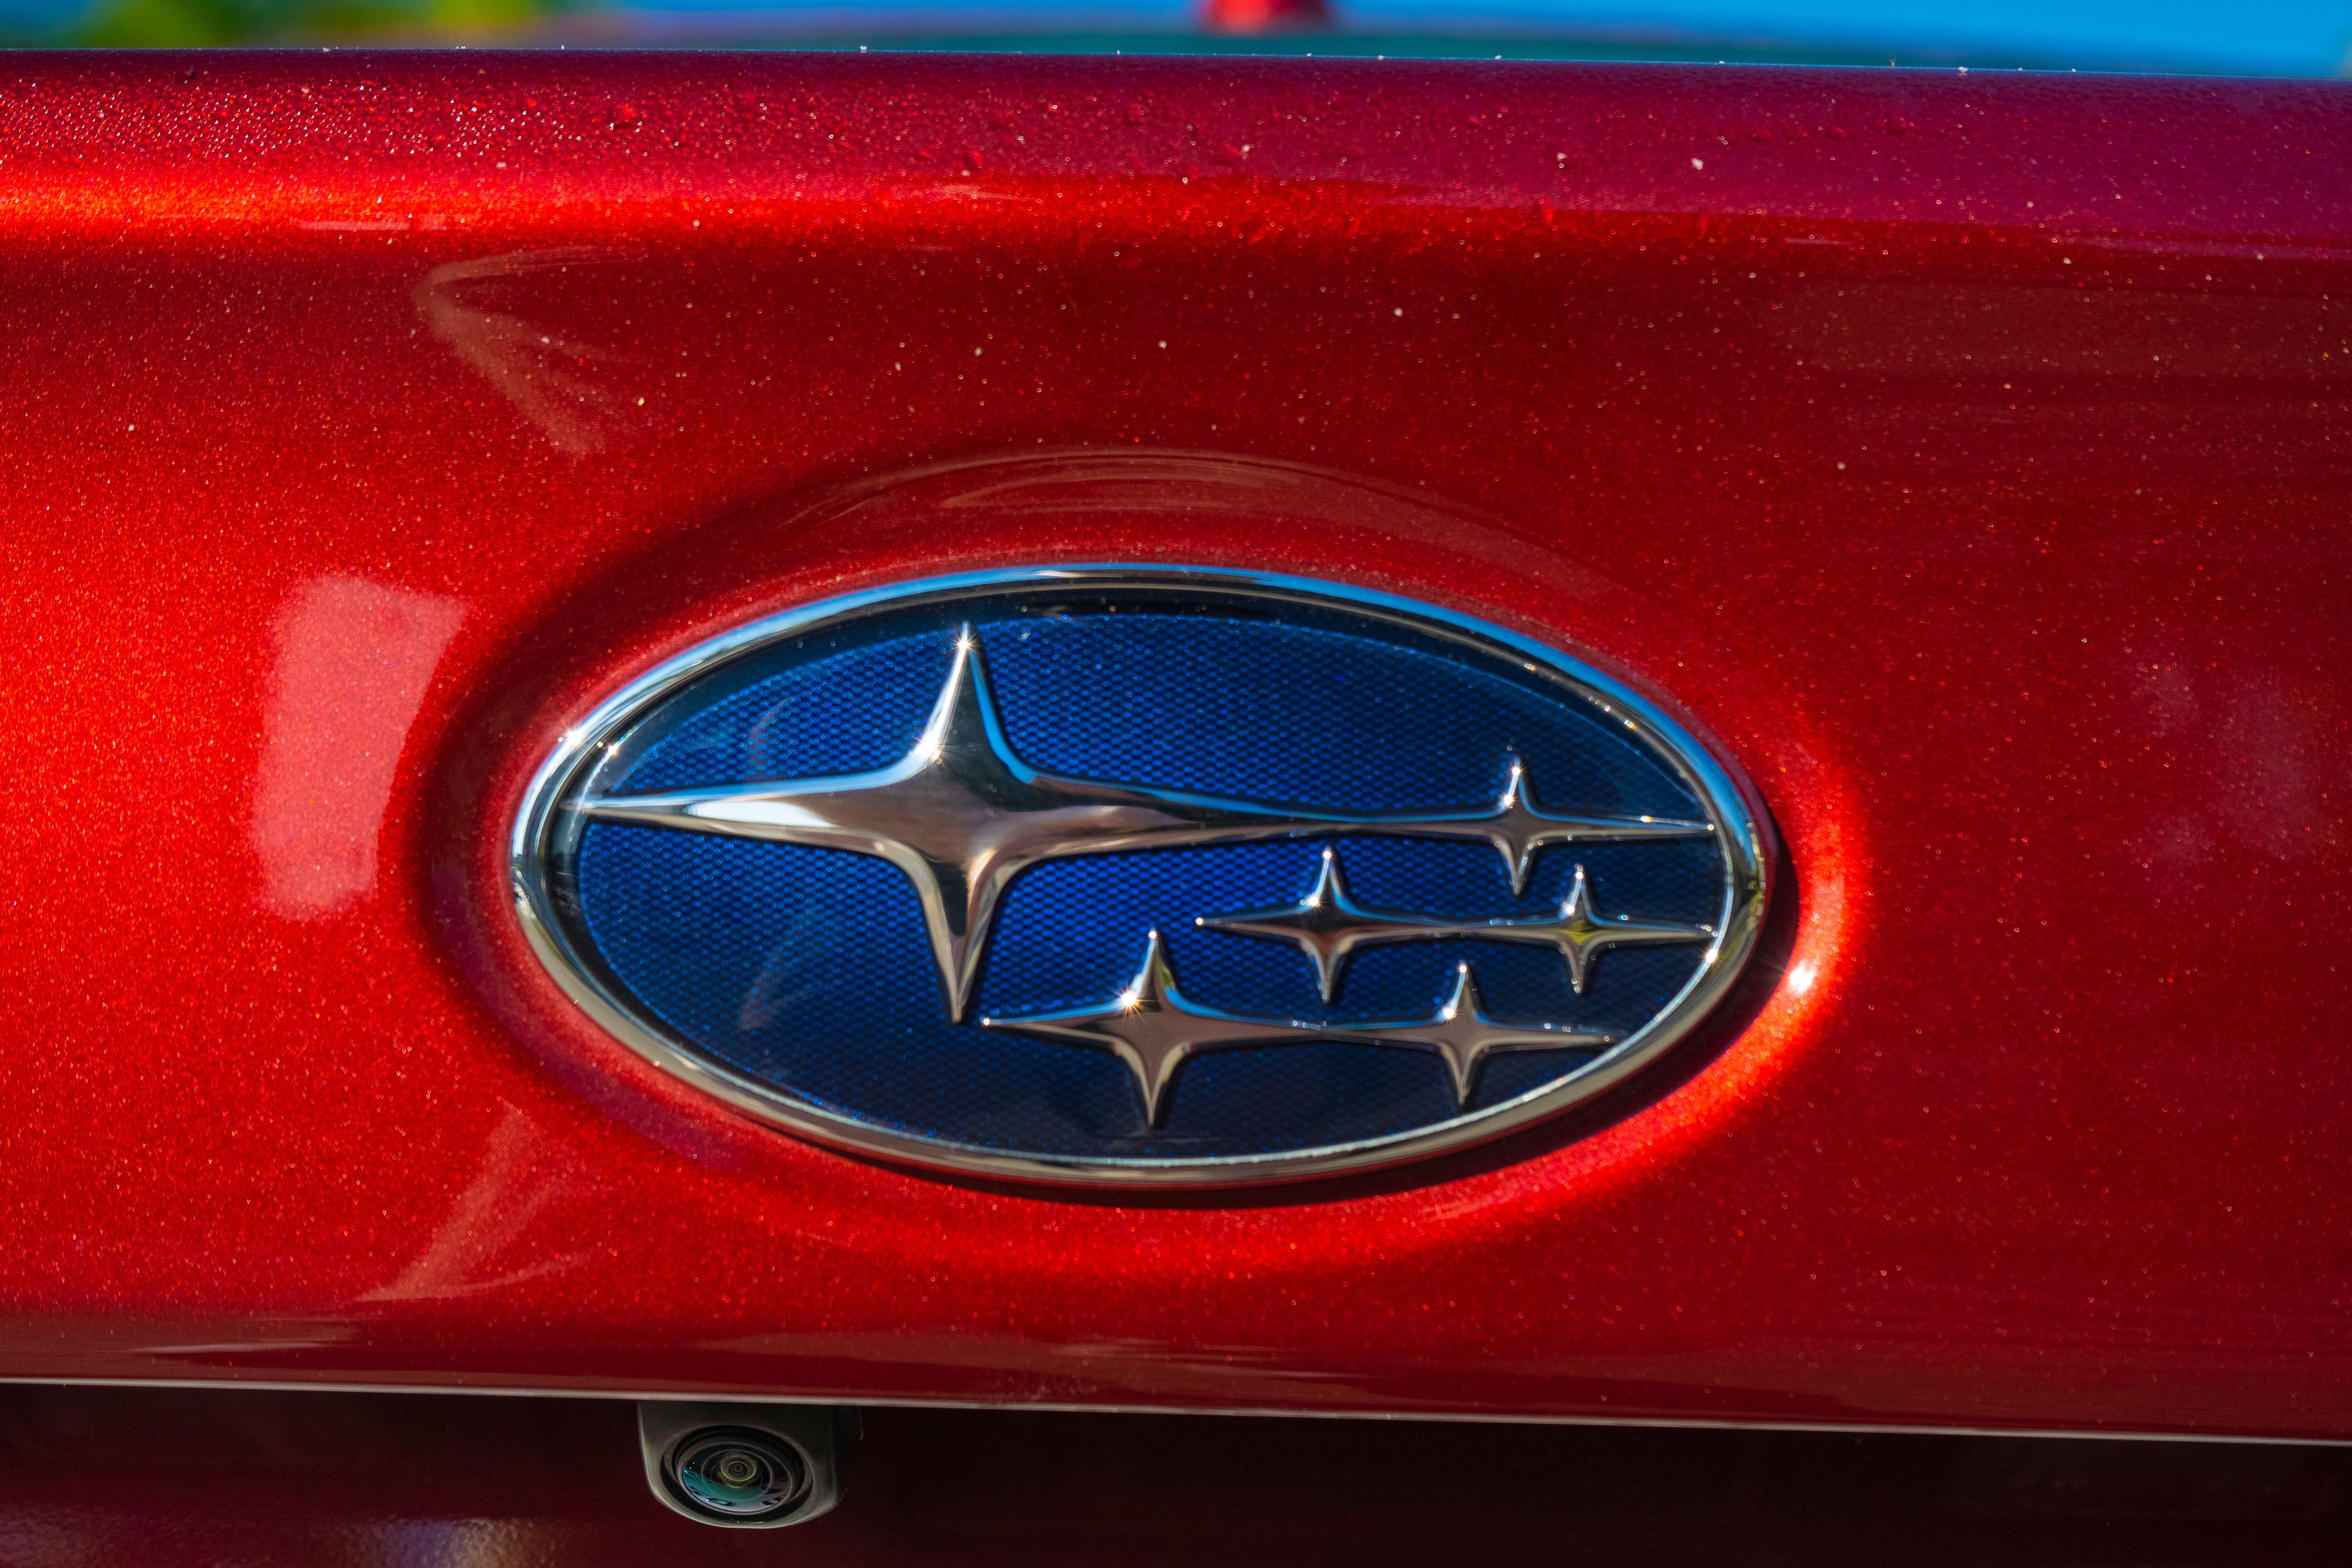 2019 Subaru Legacy - Driven